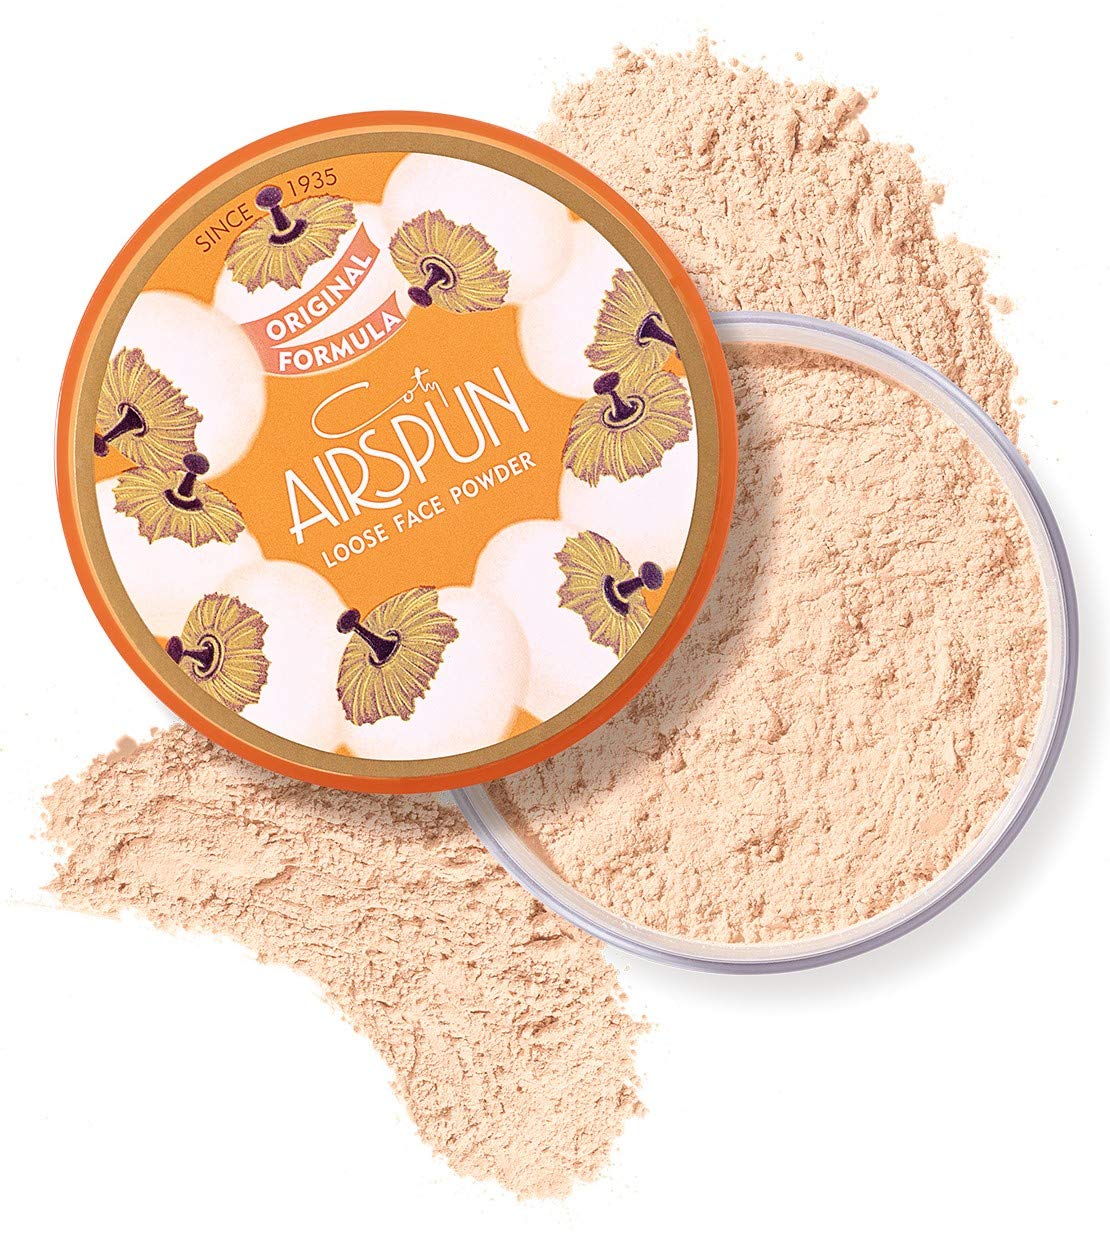 Coty Airspun Loose Powder – Translucent Extra Coverage – 35g 